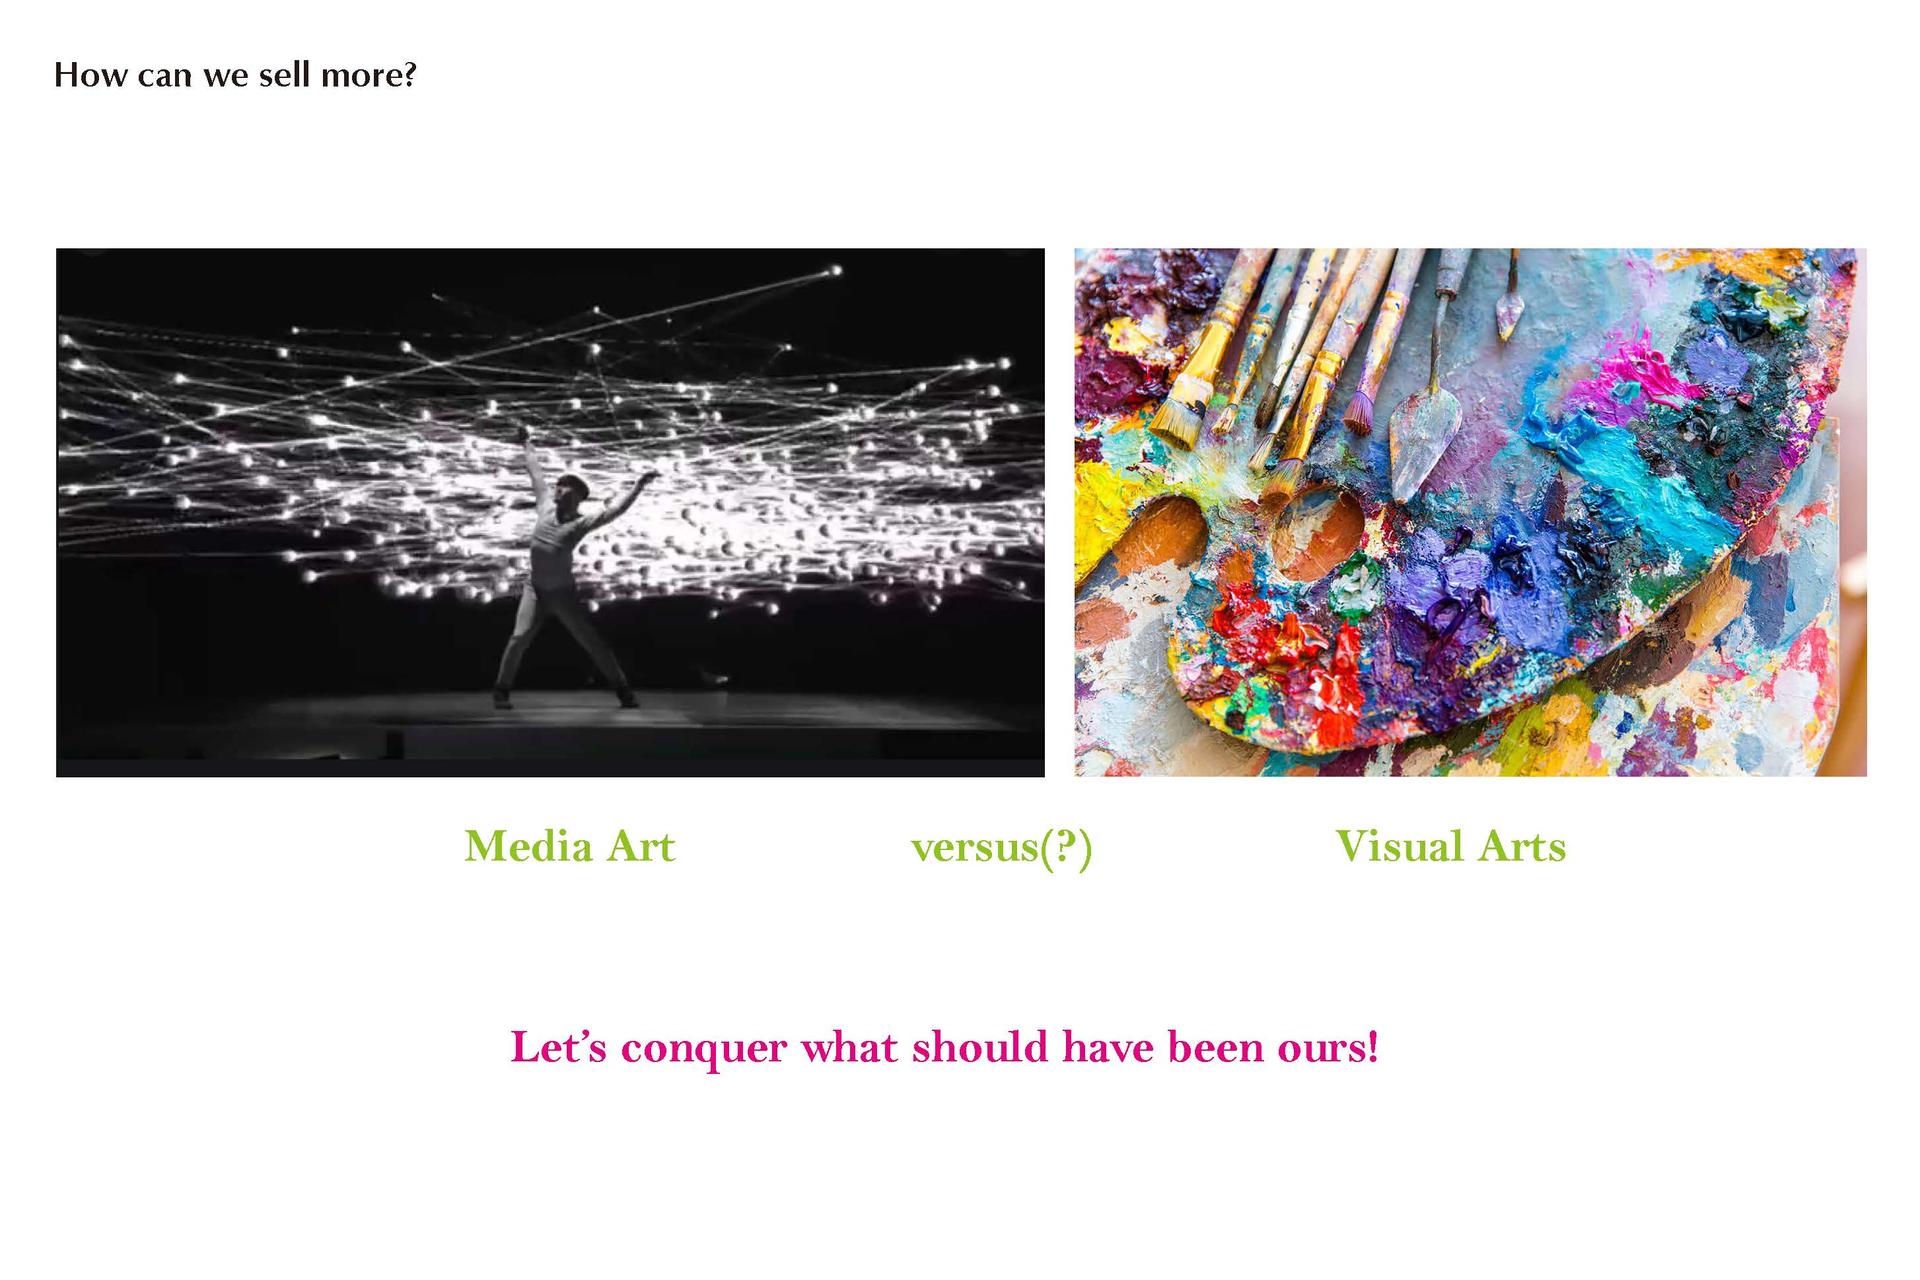 Visual Arts vs. Media Art